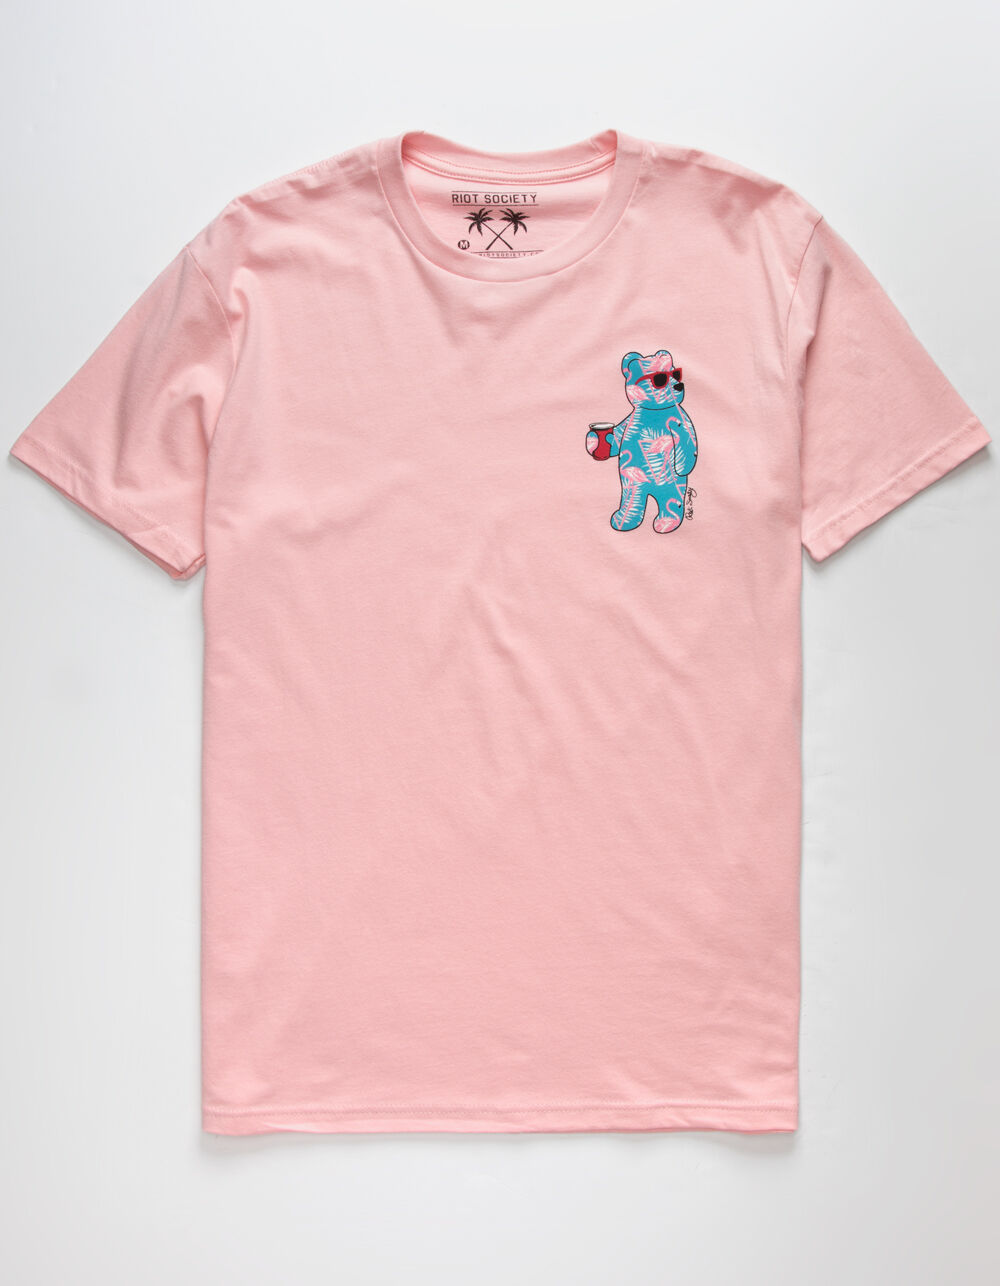 RIOT SOCIETY Flamingo Bear Mens T-Shirt - |